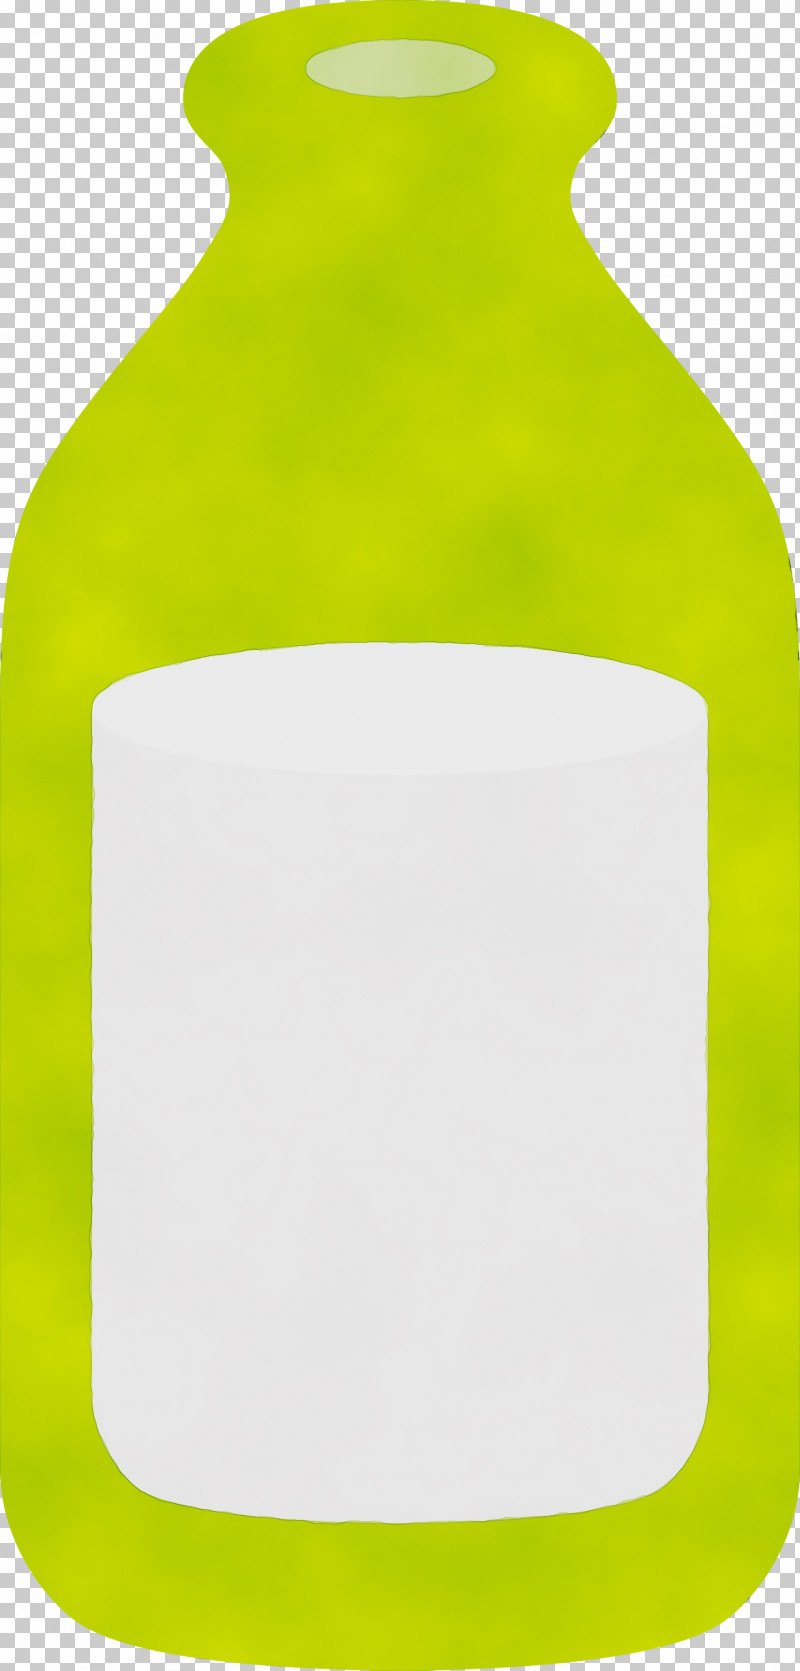 Glass Bottle Bottle Green Glass Fruit PNG, Clipart, Bottle, Fruit, Glass, Glass Bottle, Green Free PNG Download